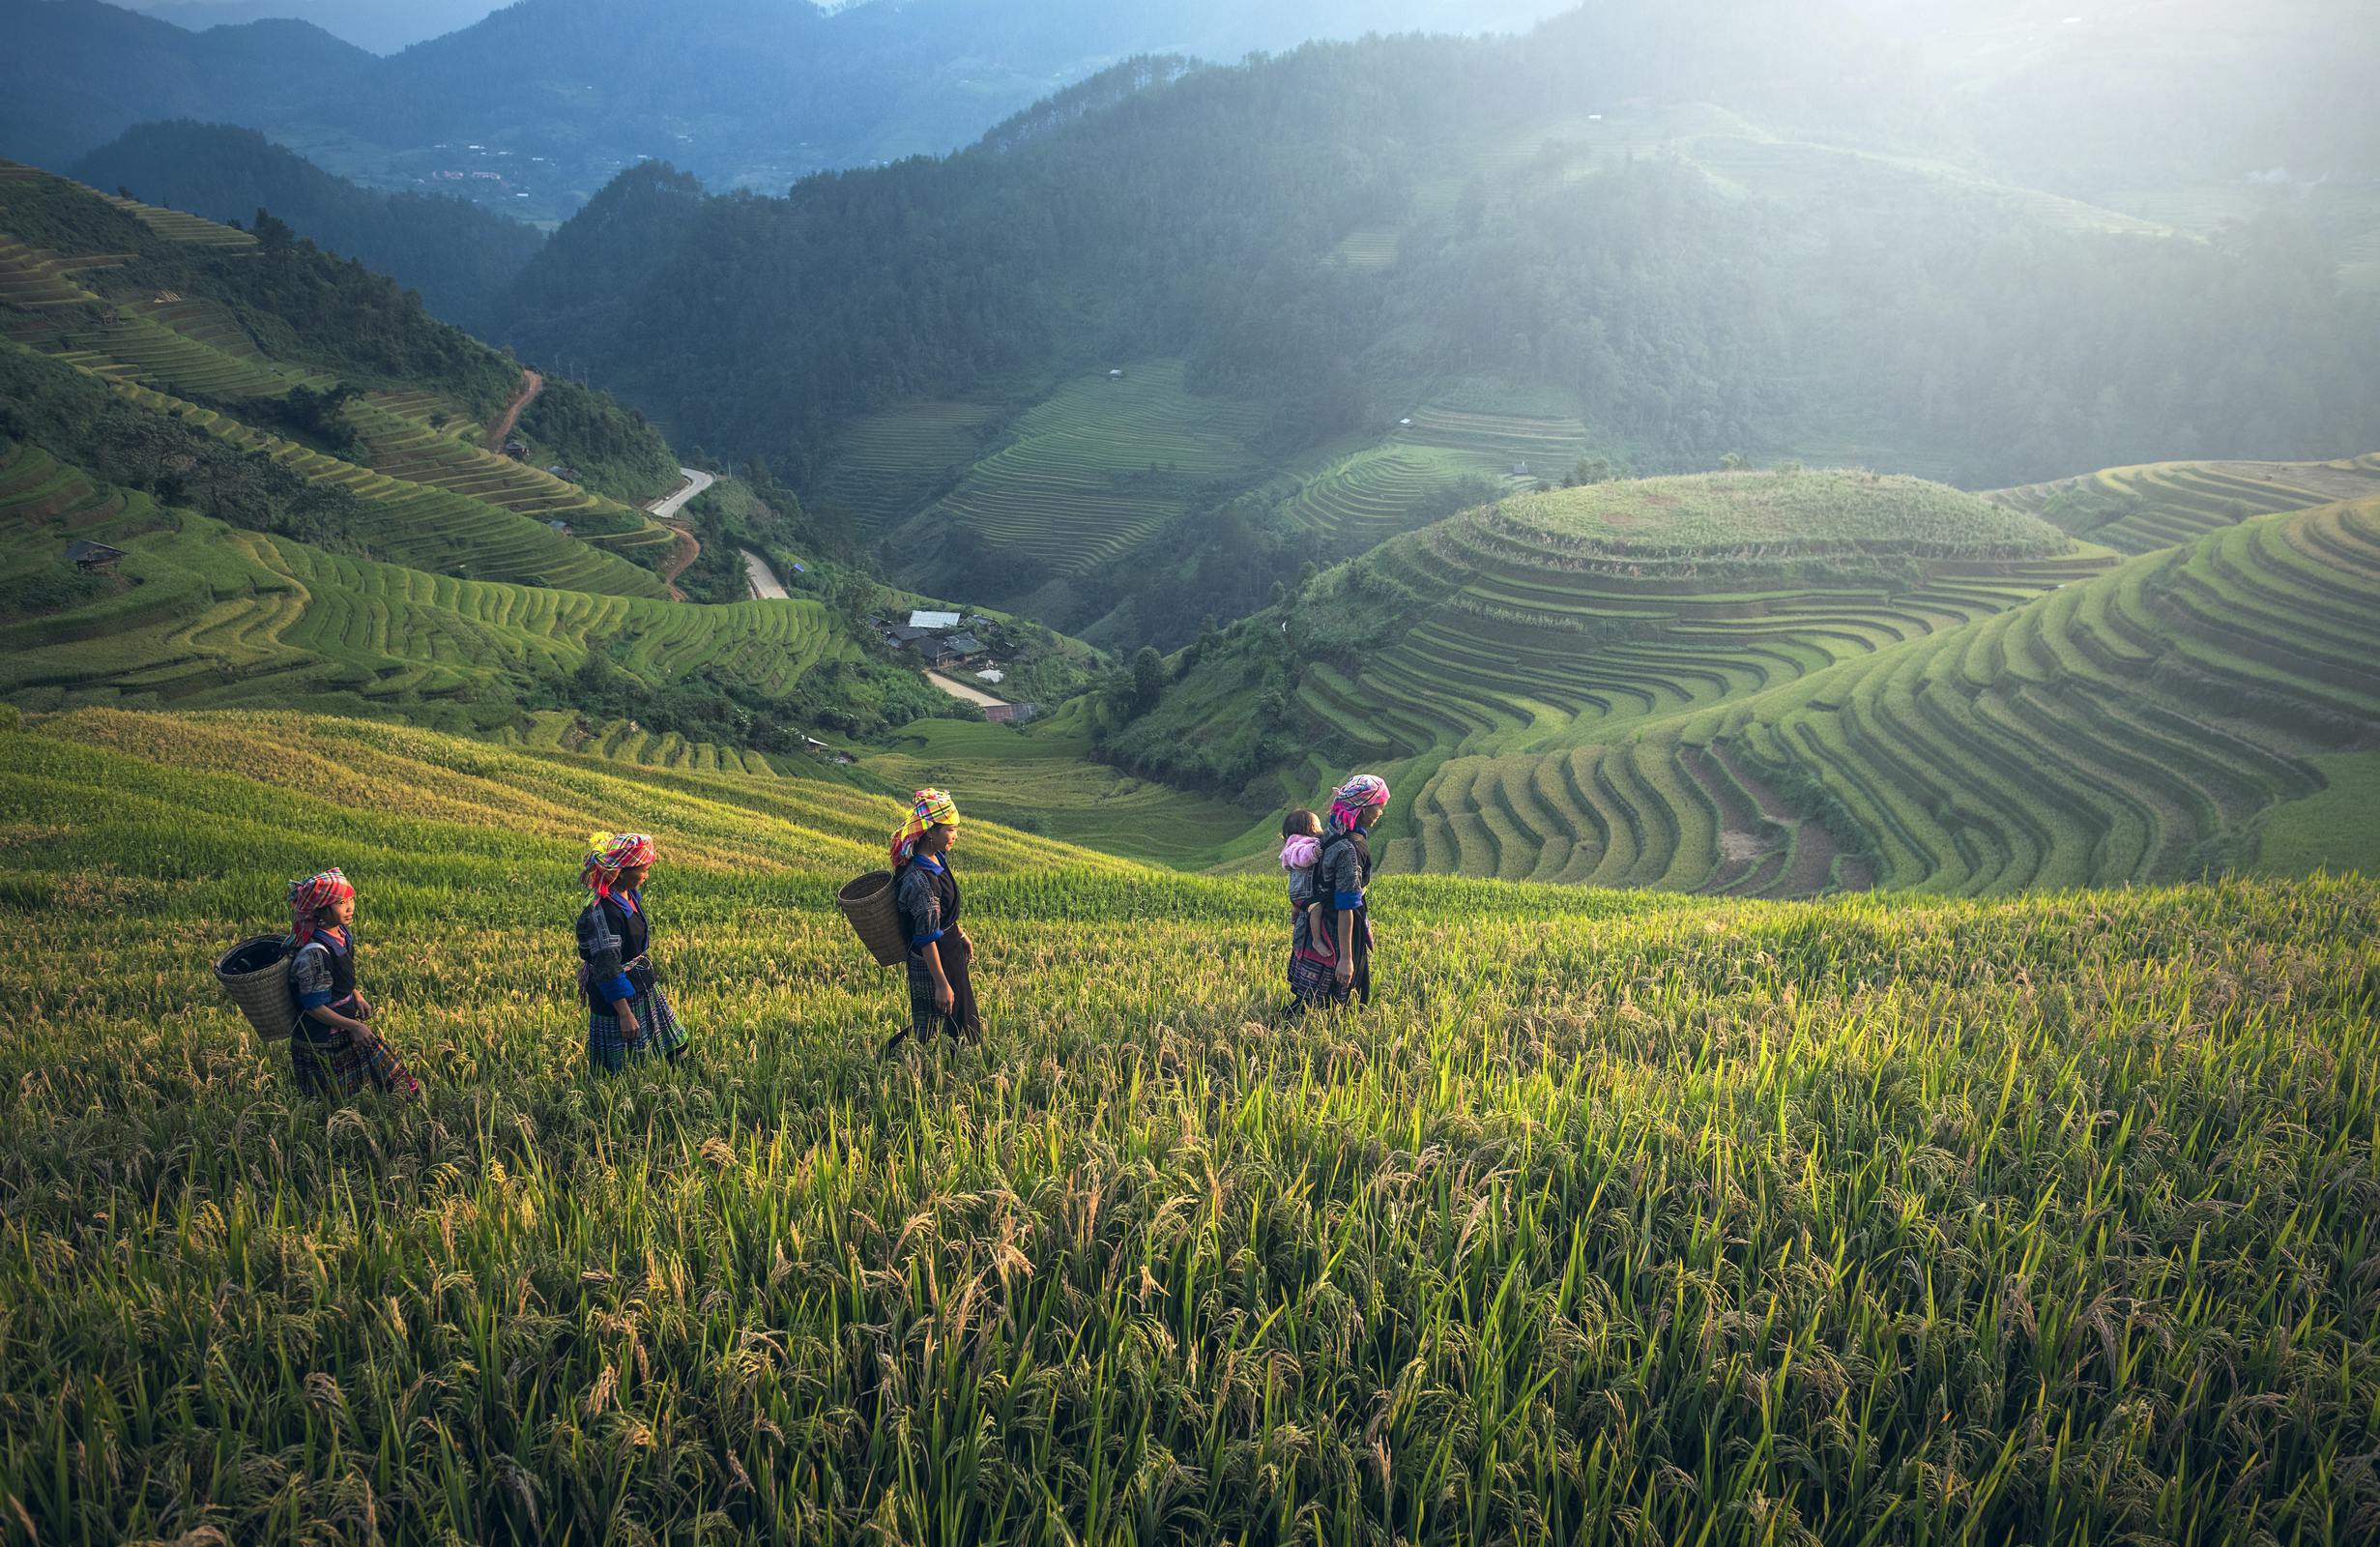 Women in a rice field nestled amid mountainous terrain